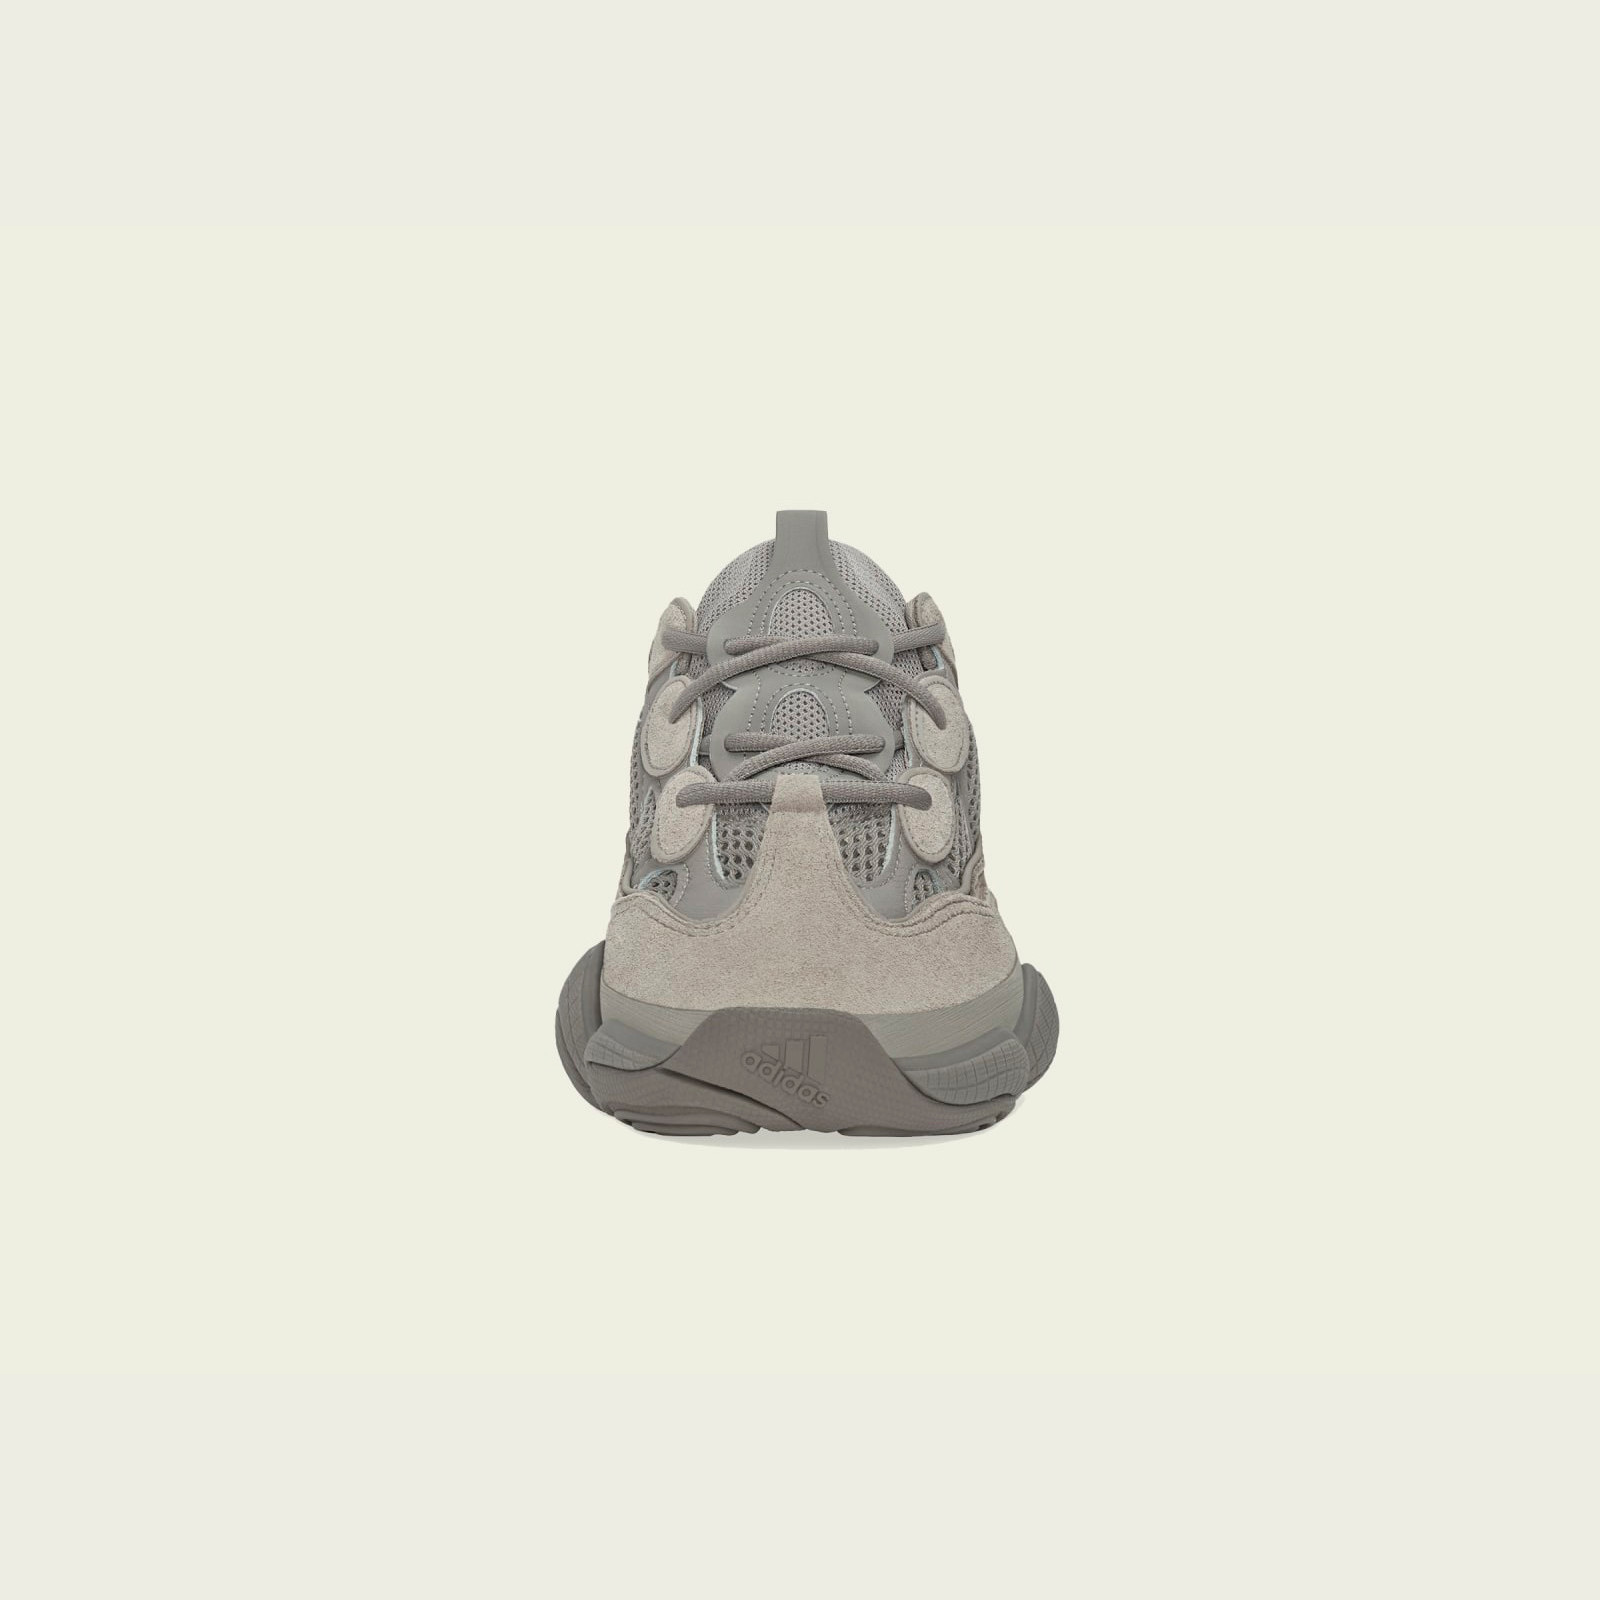 Adidas Yeezy 500
« Ash Grey »